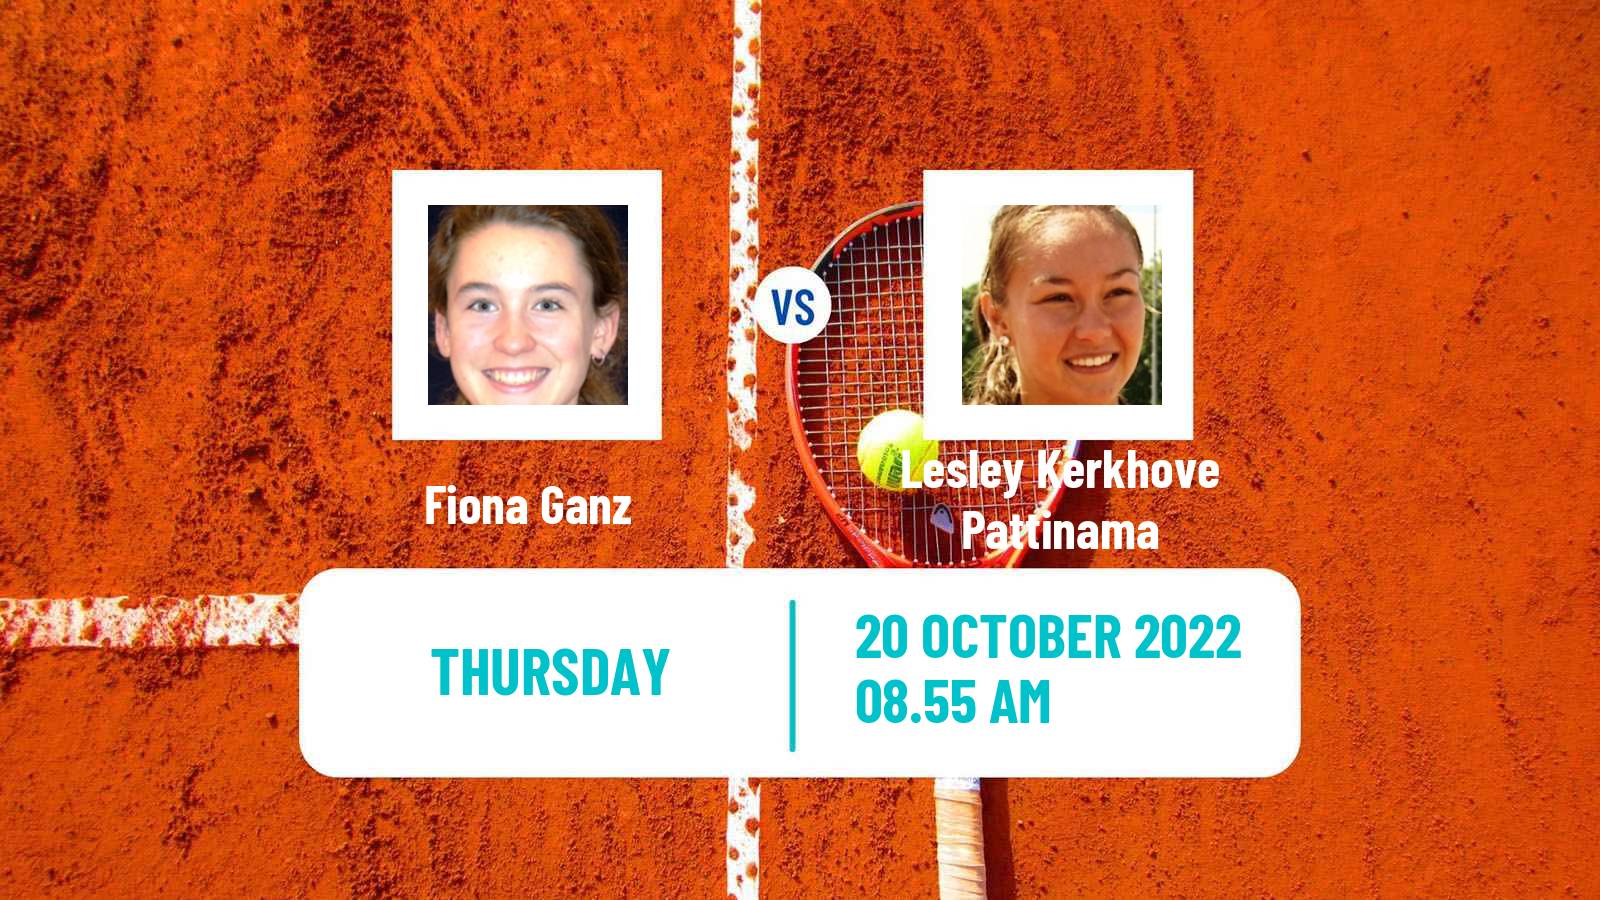 Tennis ITF Tournaments Fiona Ganz - Lesley Kerkhove Pattinama